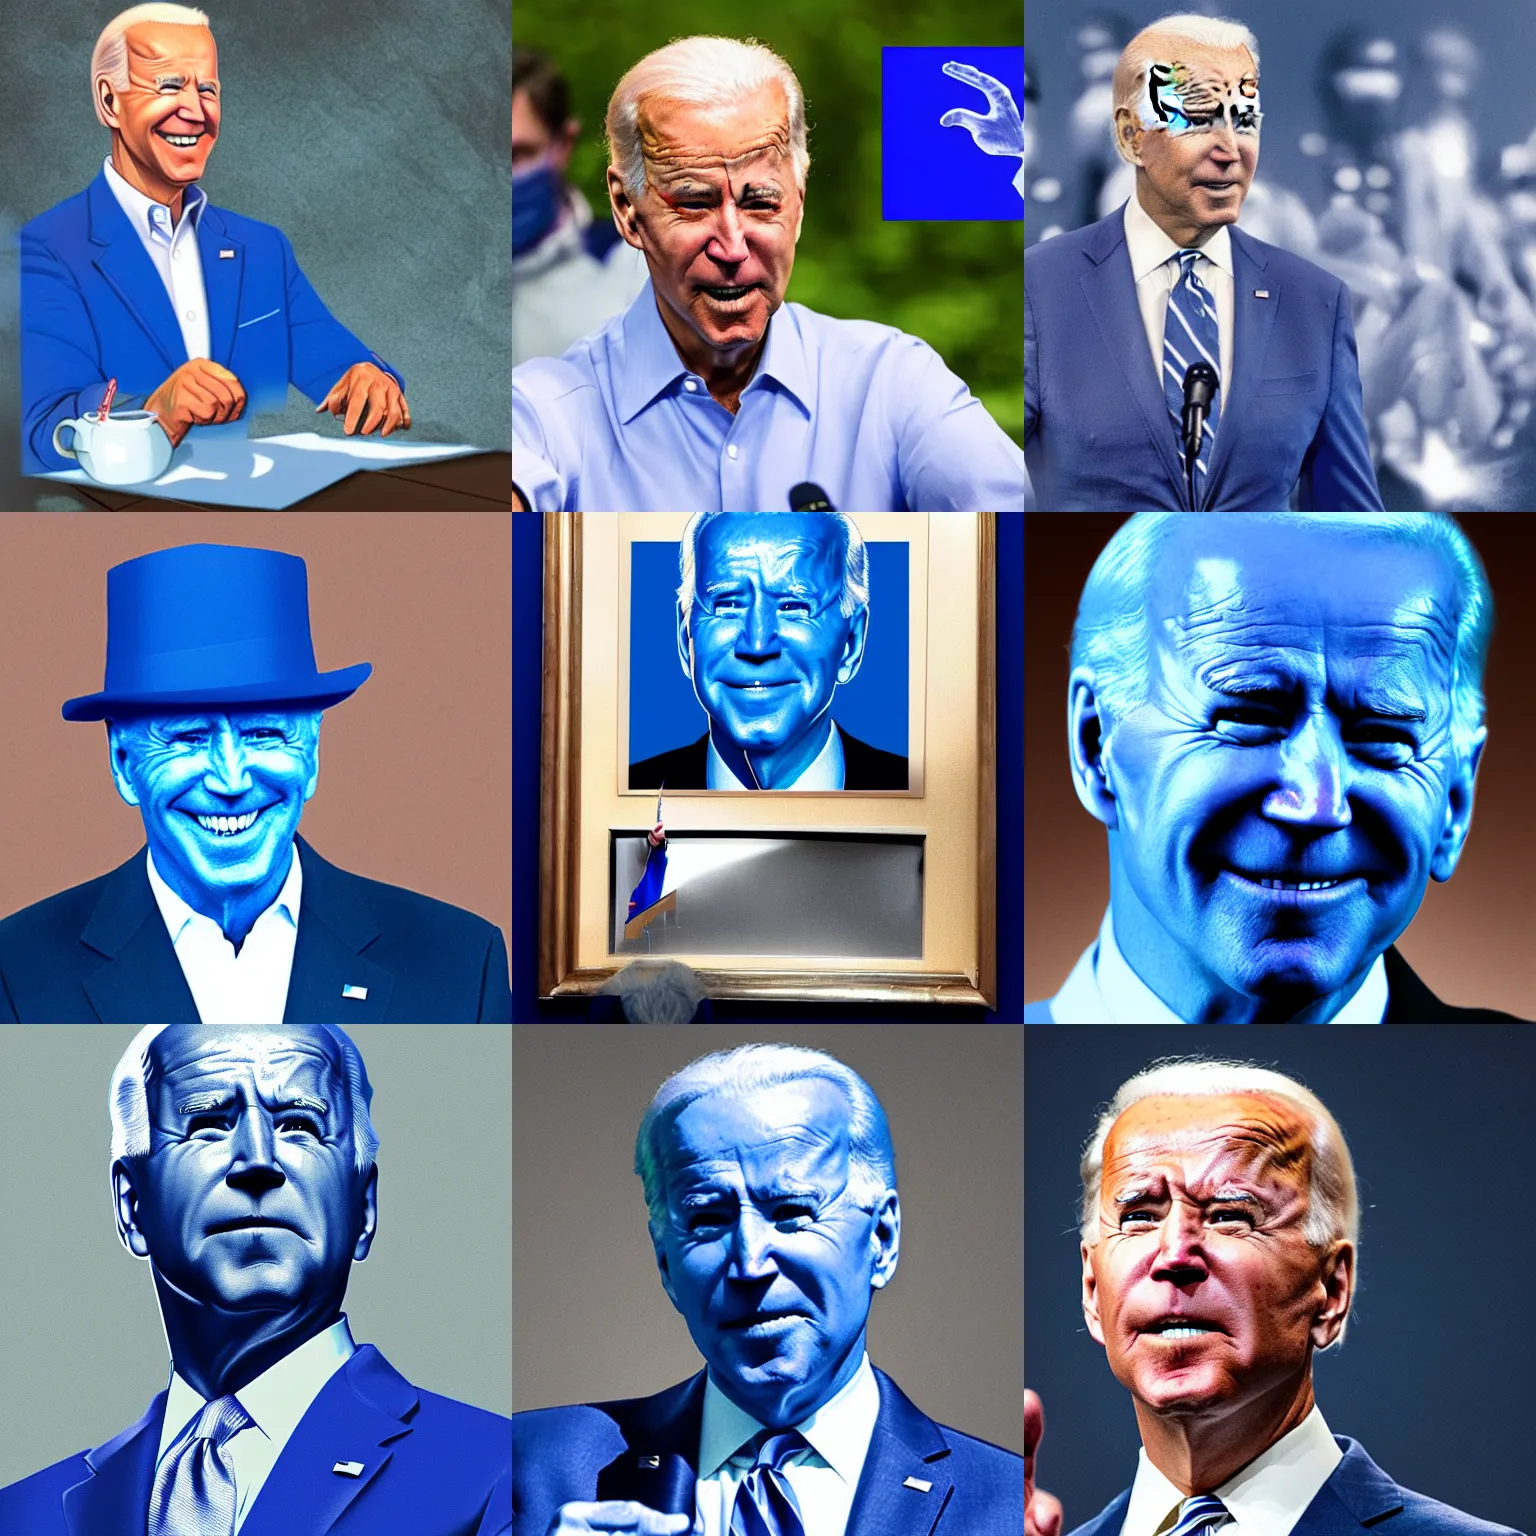 Prompt: Joe Biden as a blue smurf